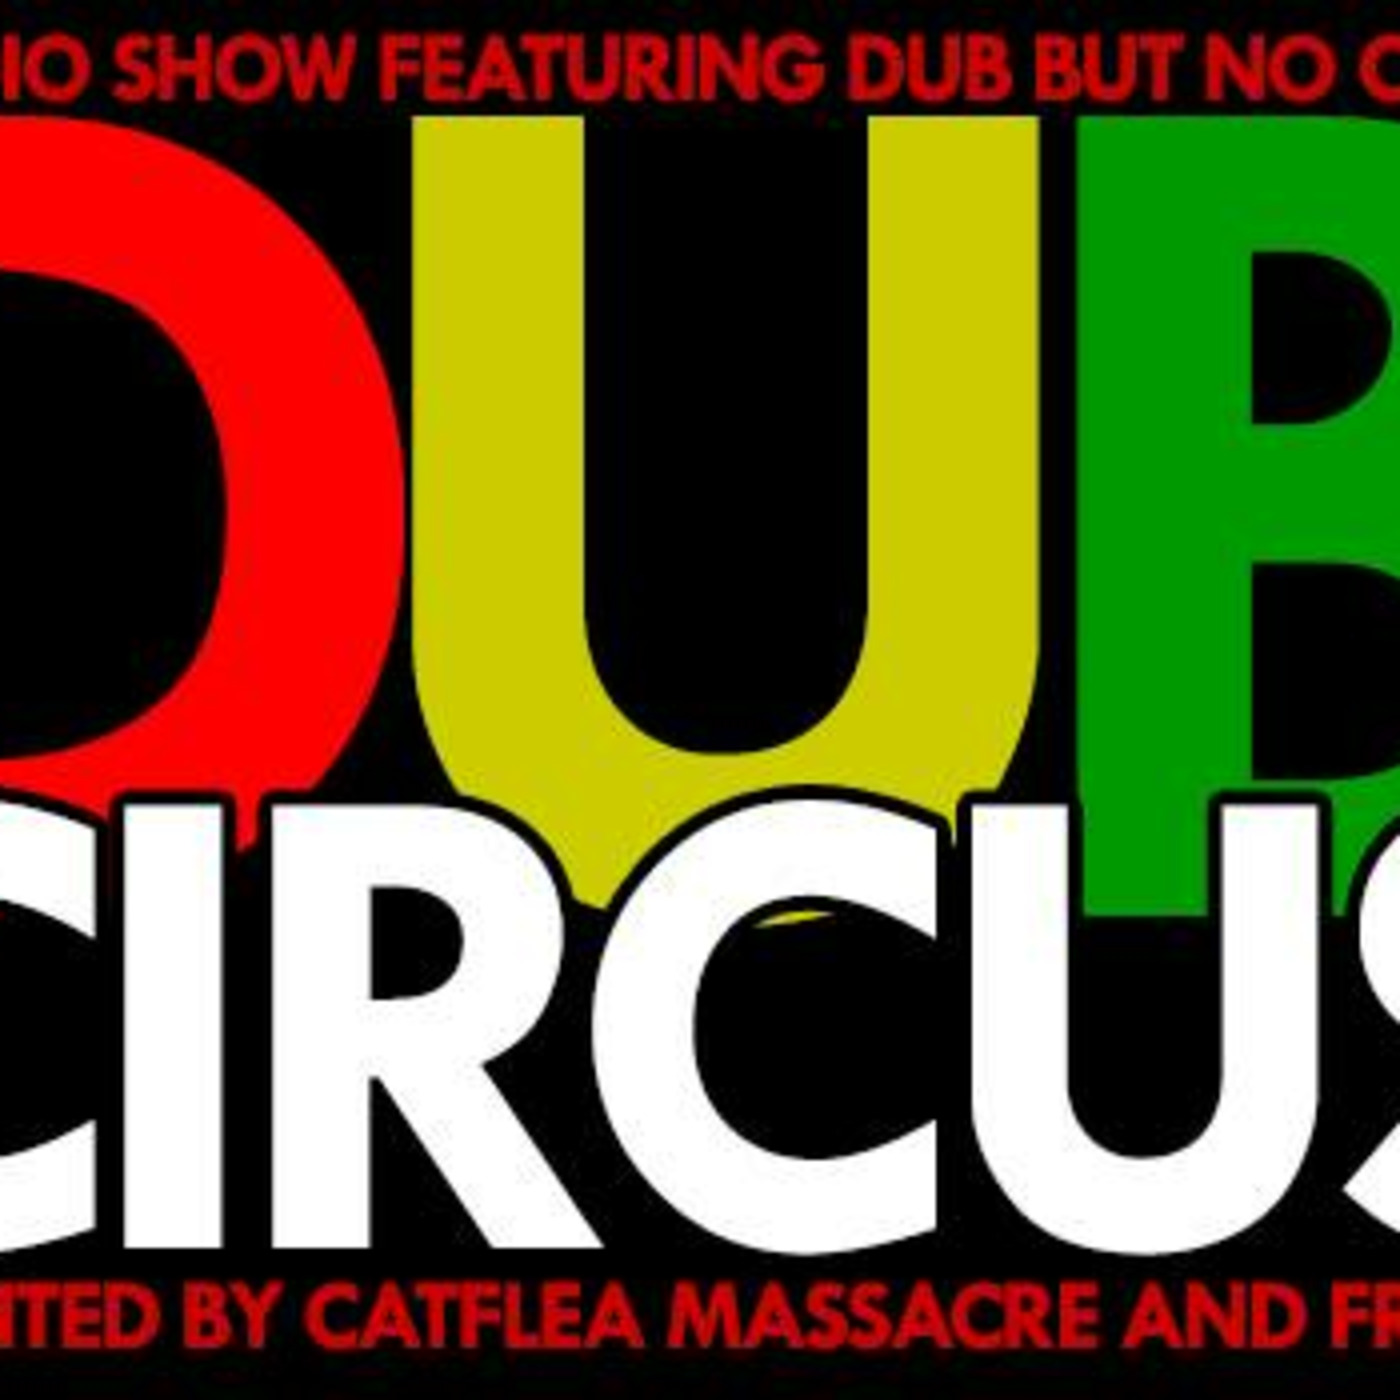 Episode 2766: Dub Circus Show 215 On bootboyradio.net